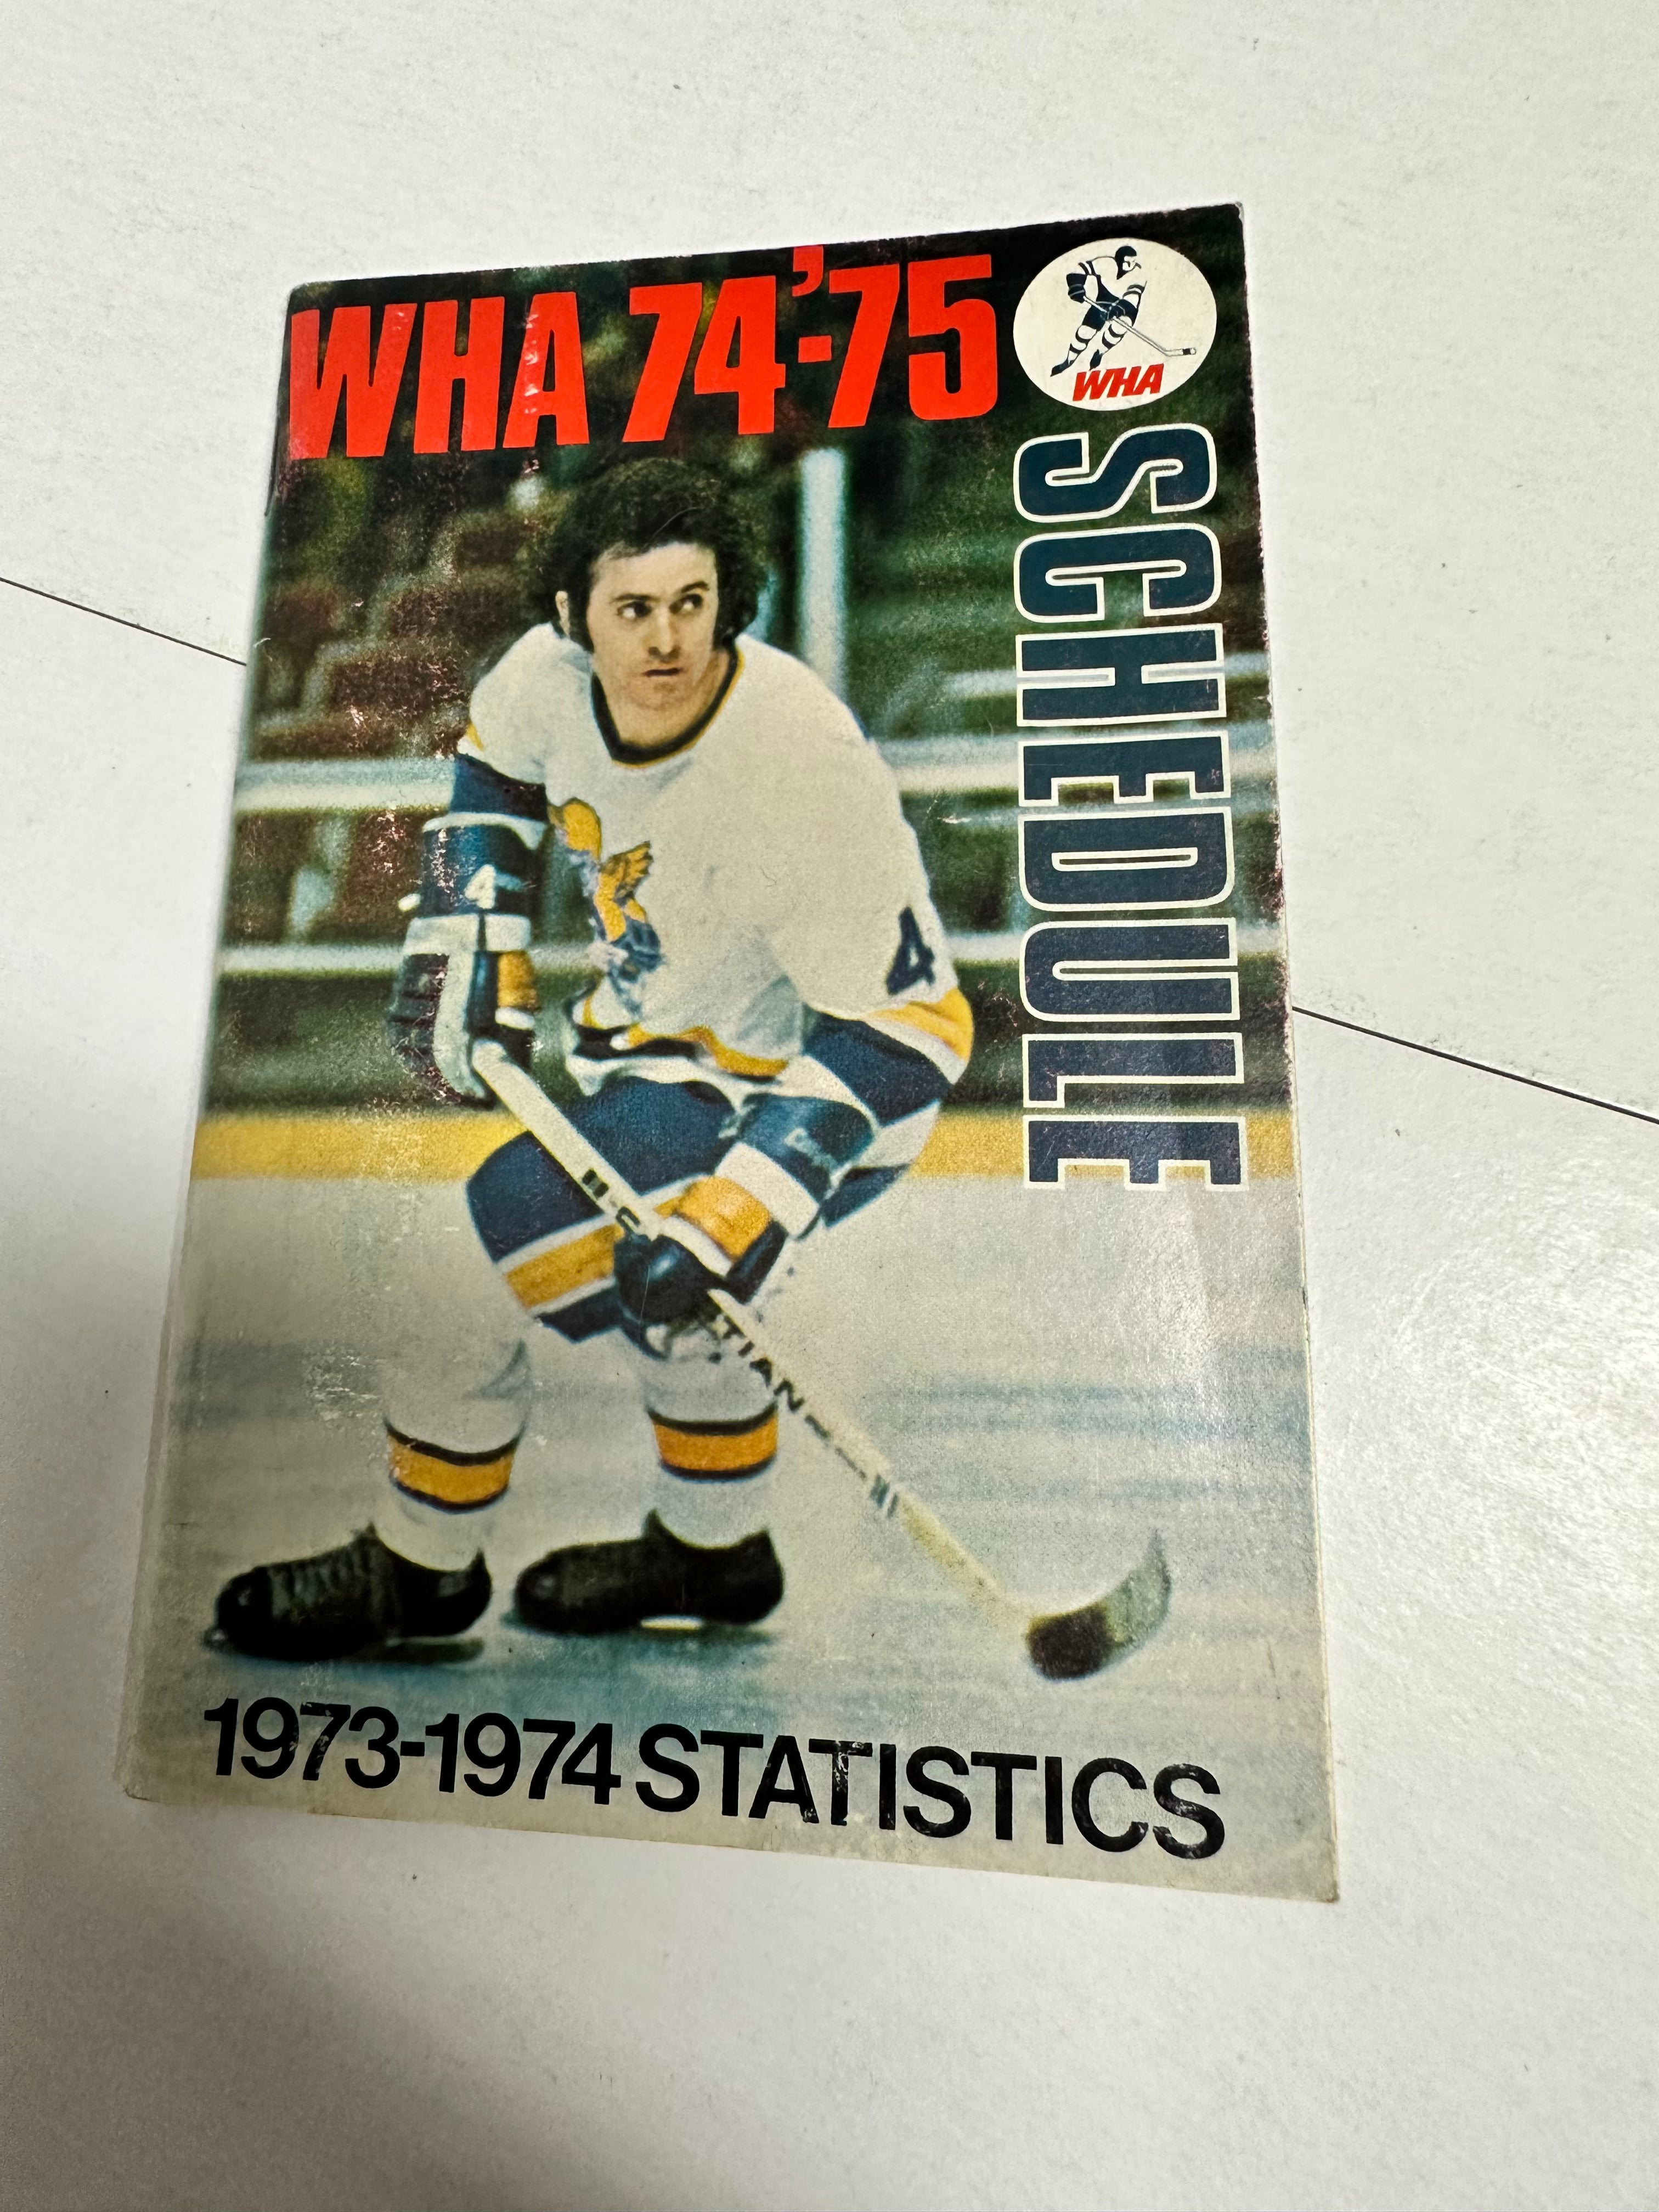 1974-75 WHA hockey media guide